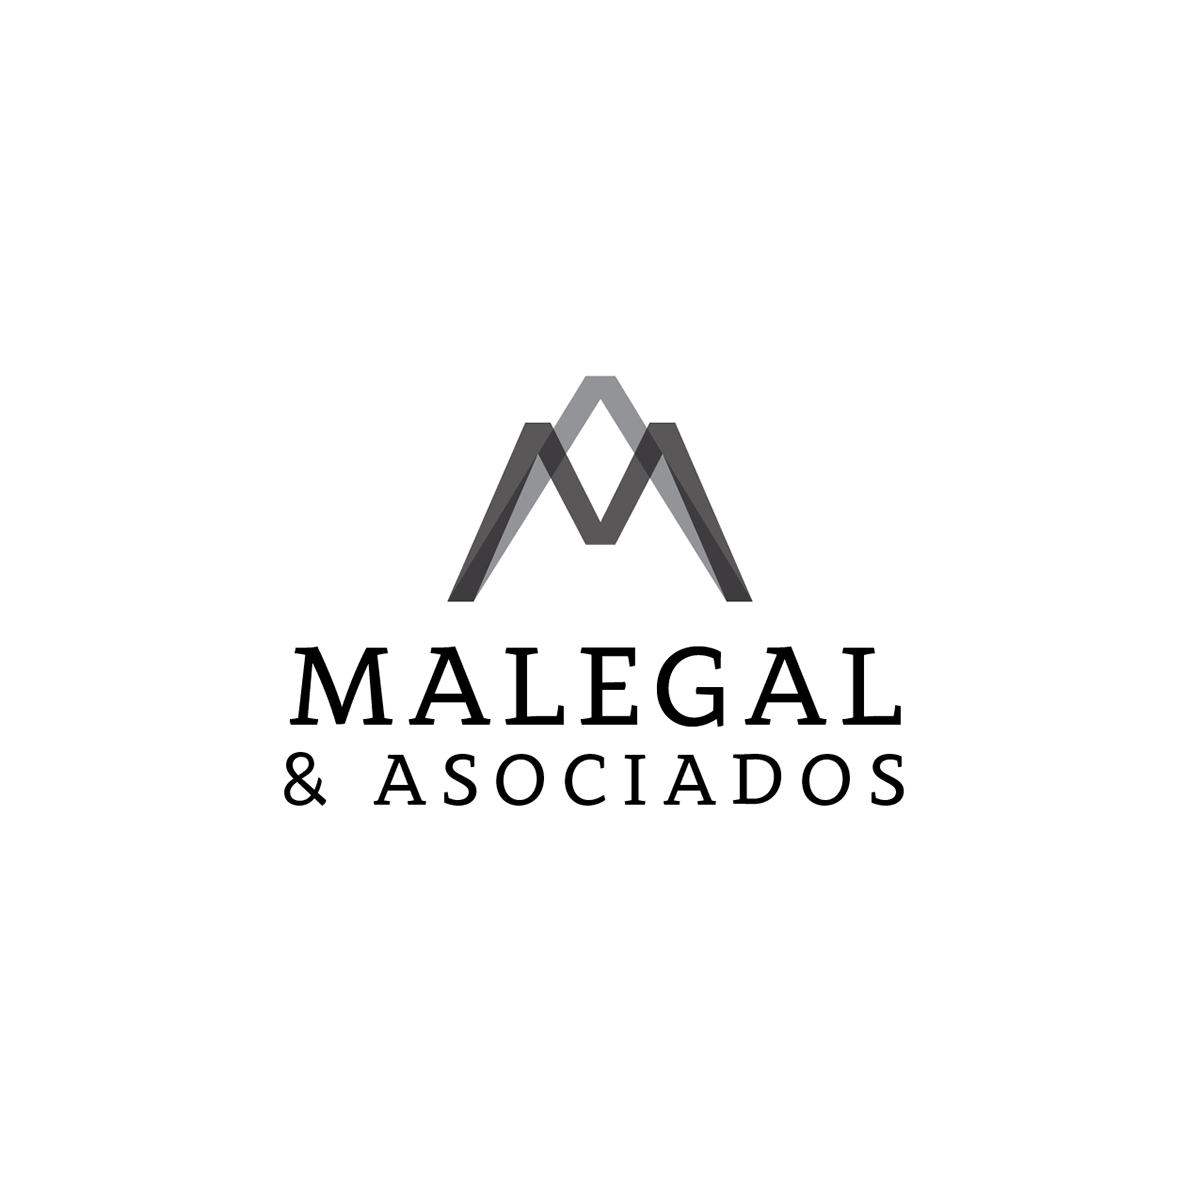 malegal pablo Prada olbap lawyers branding  colombia